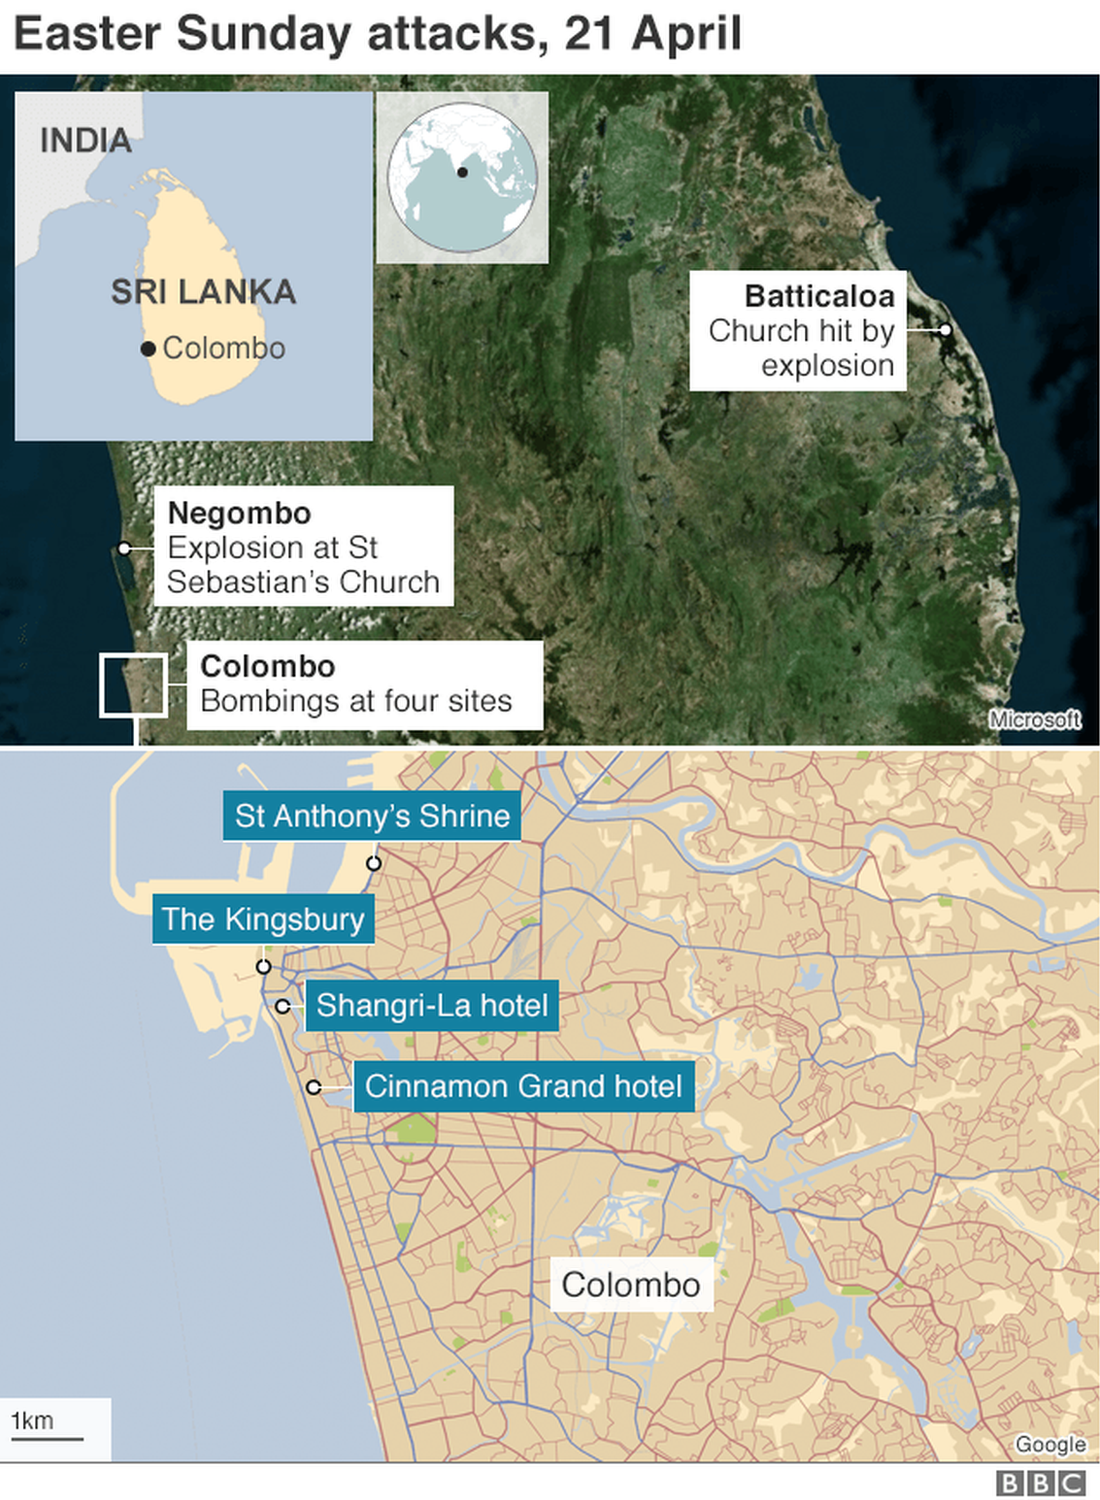 Graphic showing show terror attacks unfolded in Sri Lanka